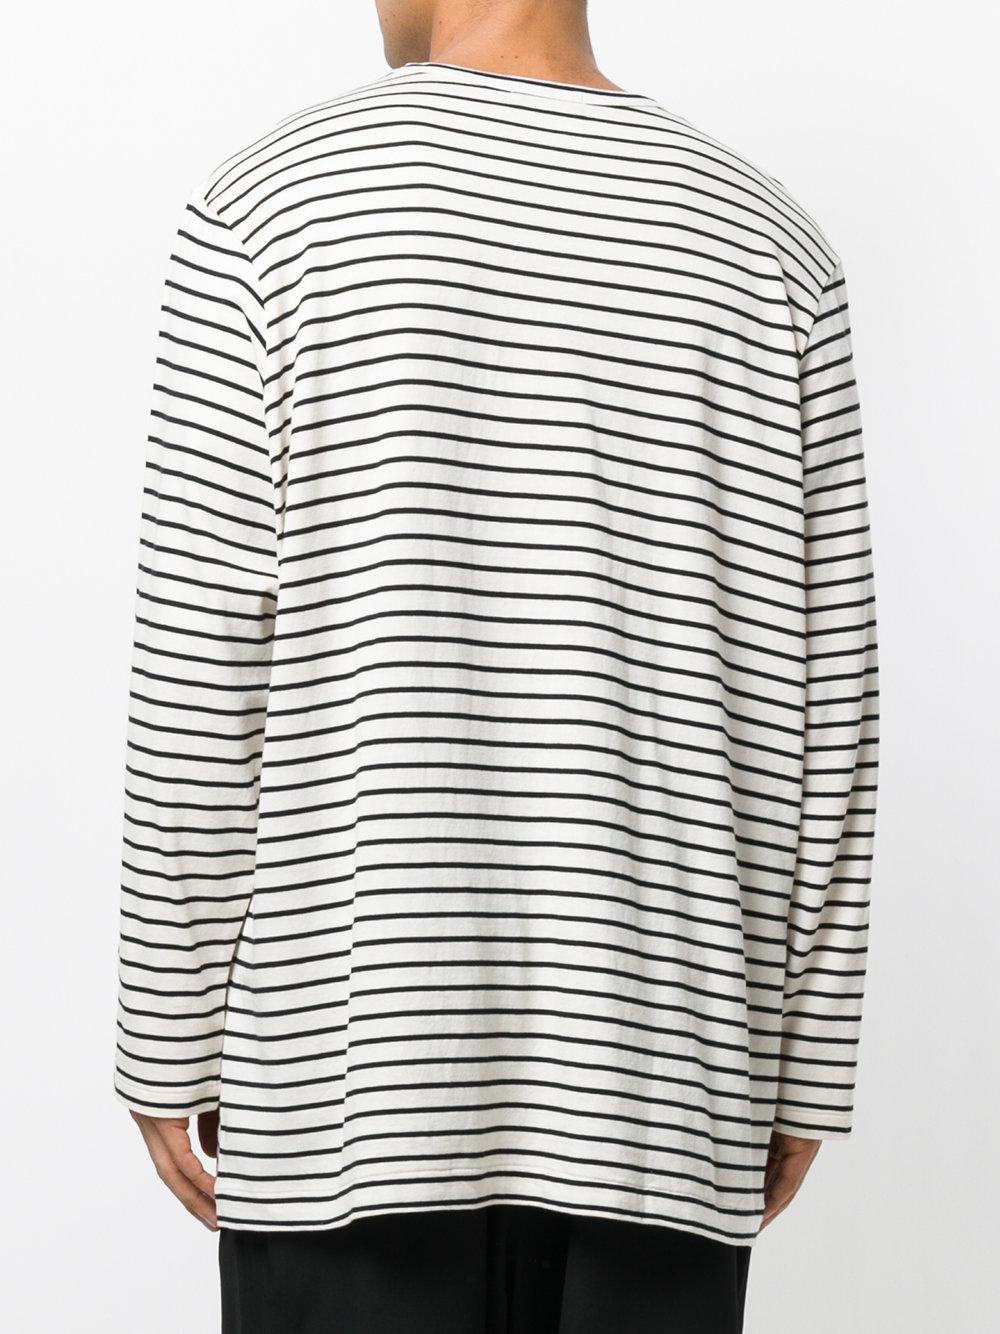 Yohji Yamamoto Cotton Striped Skull T-shirt for Men - Lyst